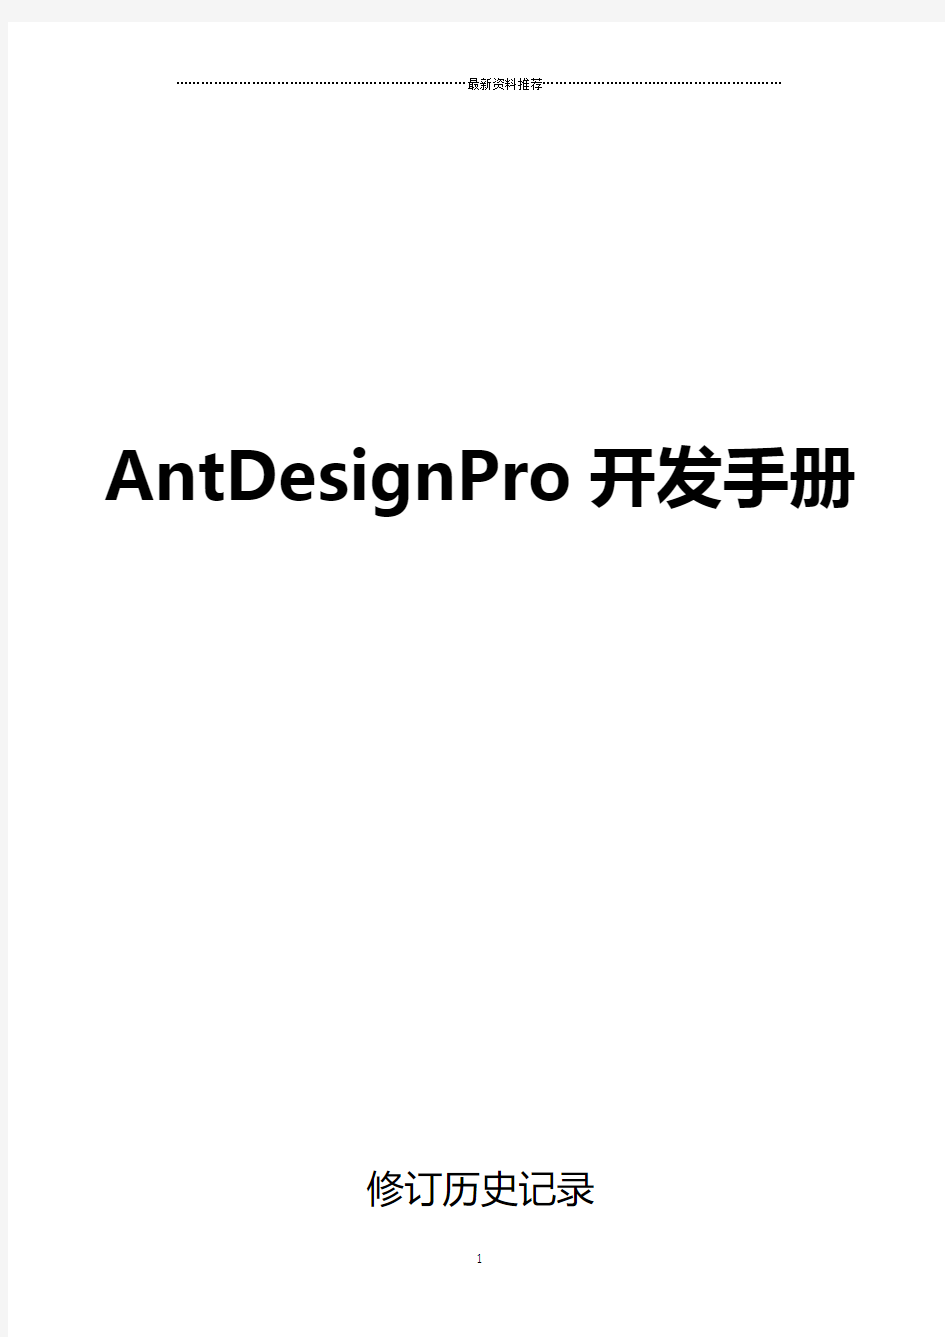 AntDesignPro开发手册精编版